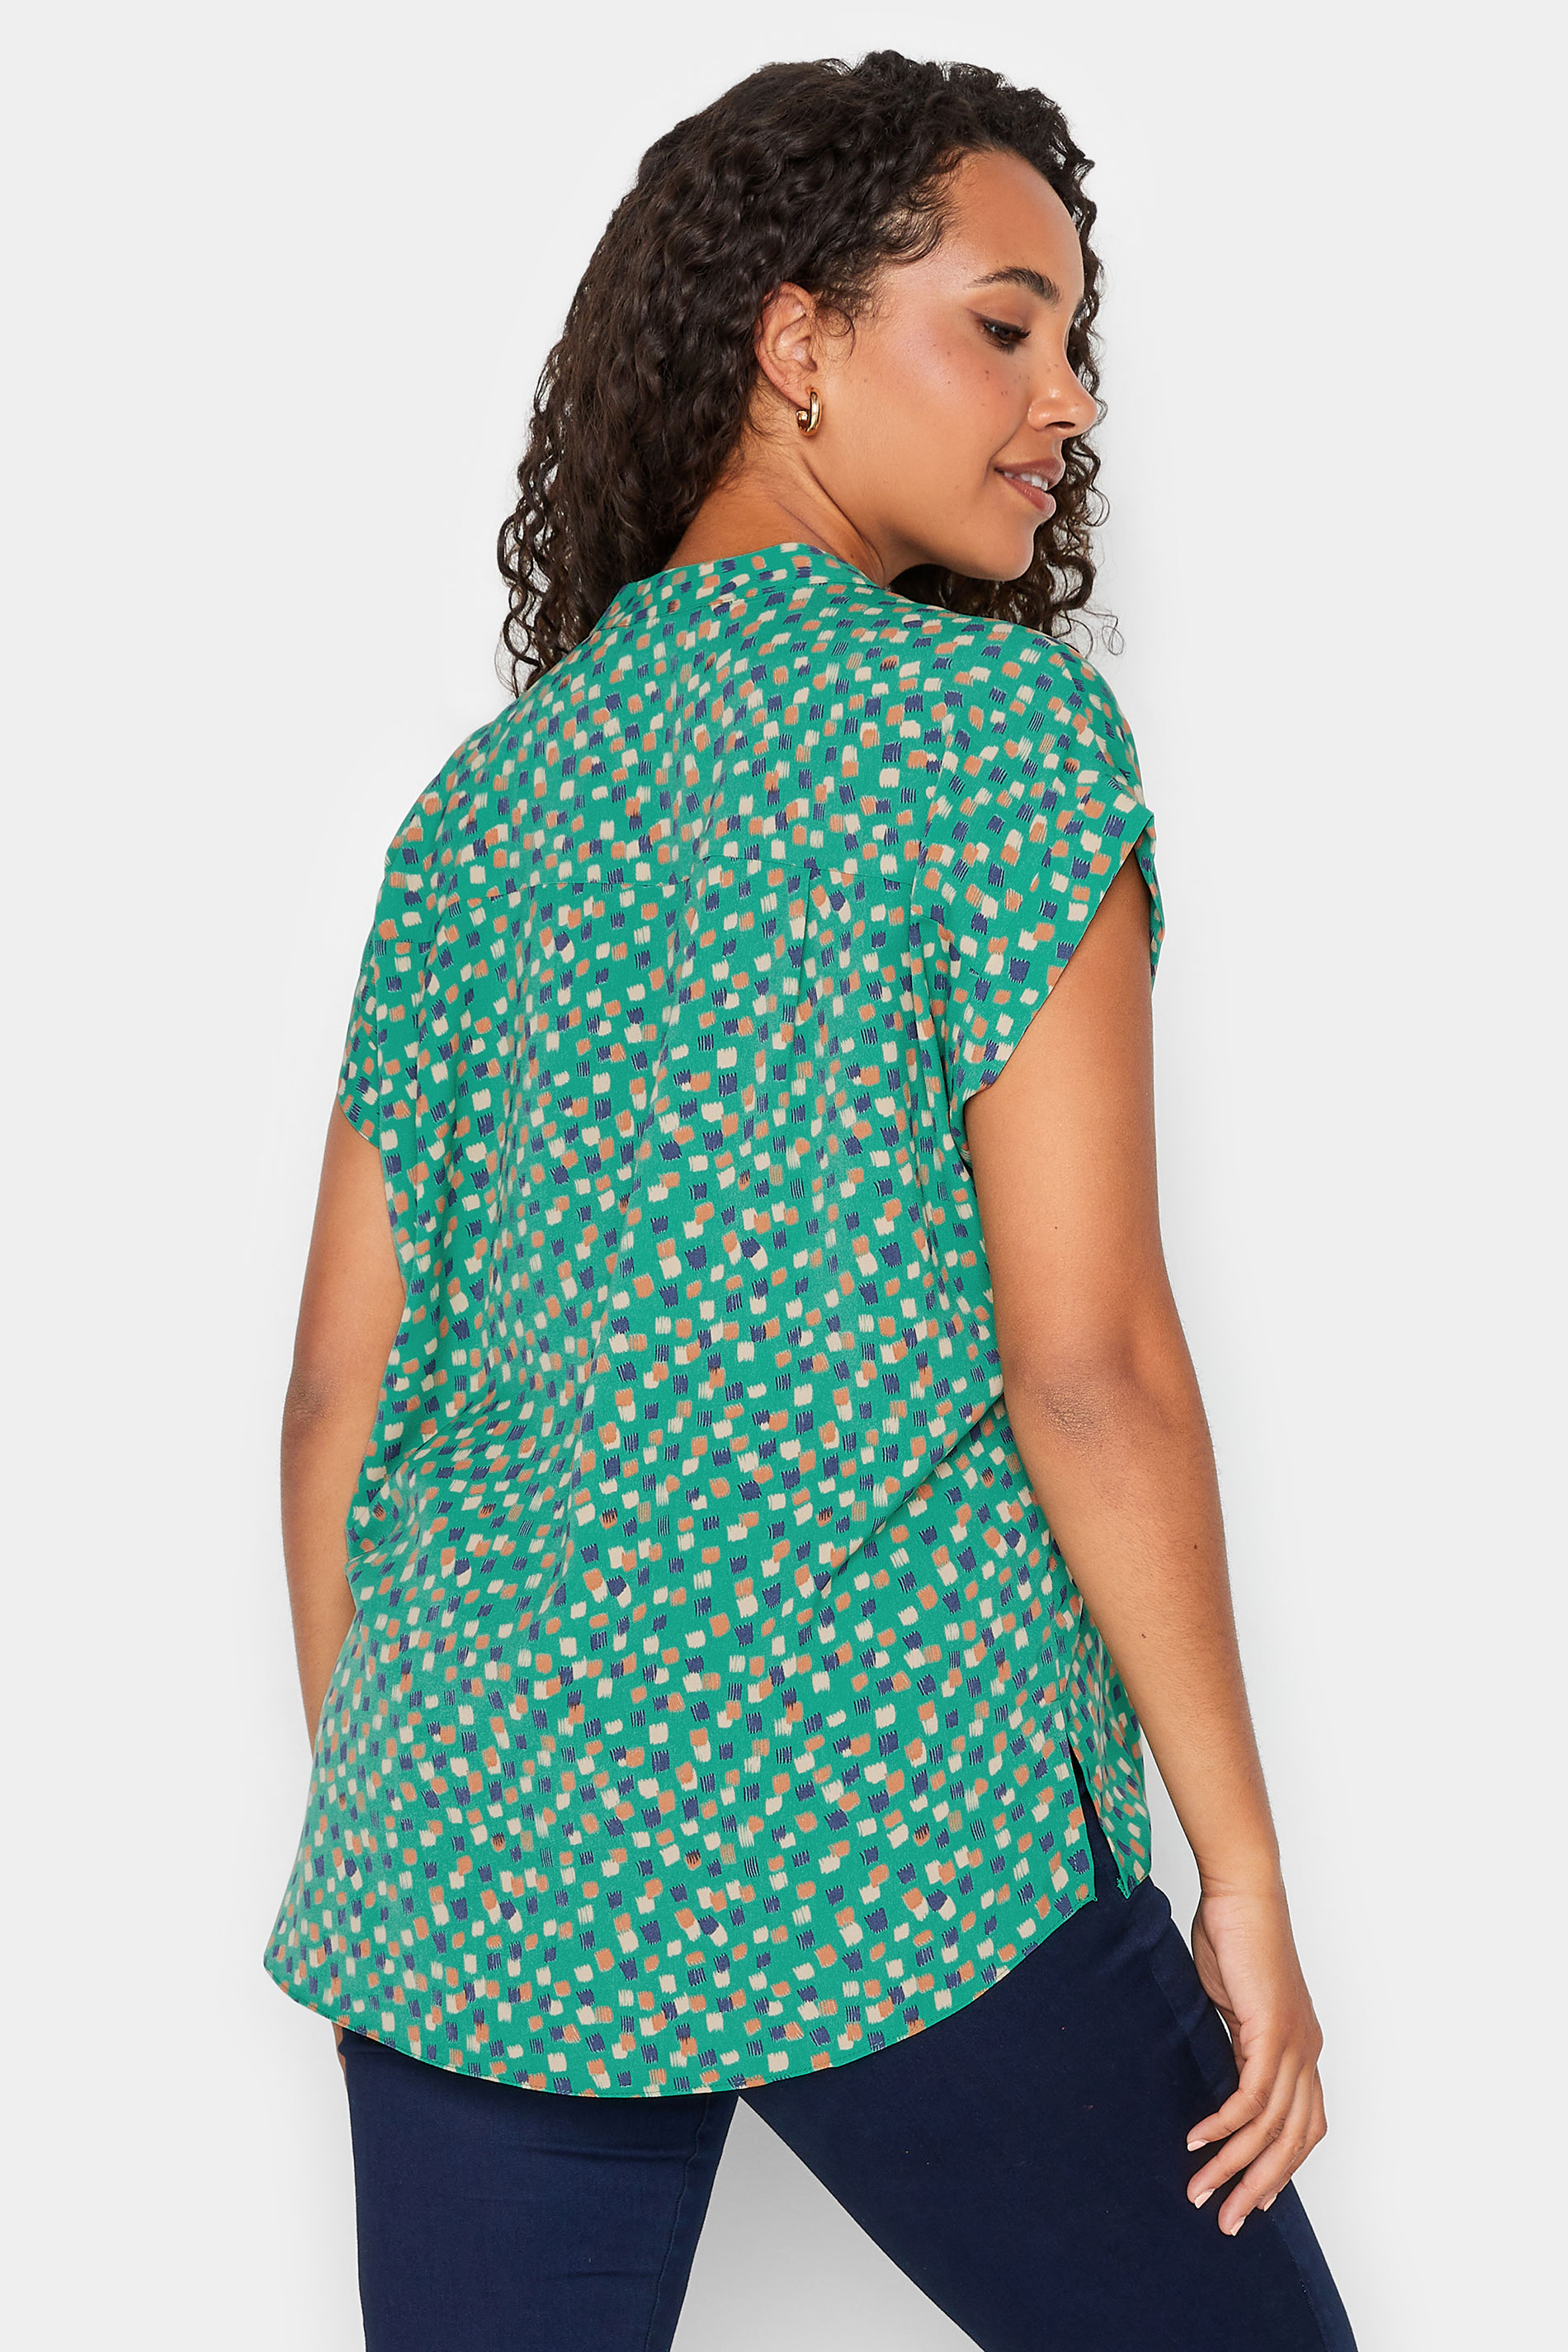 M&Co Green Spot Print V-Neck Shirt | M&Co 3